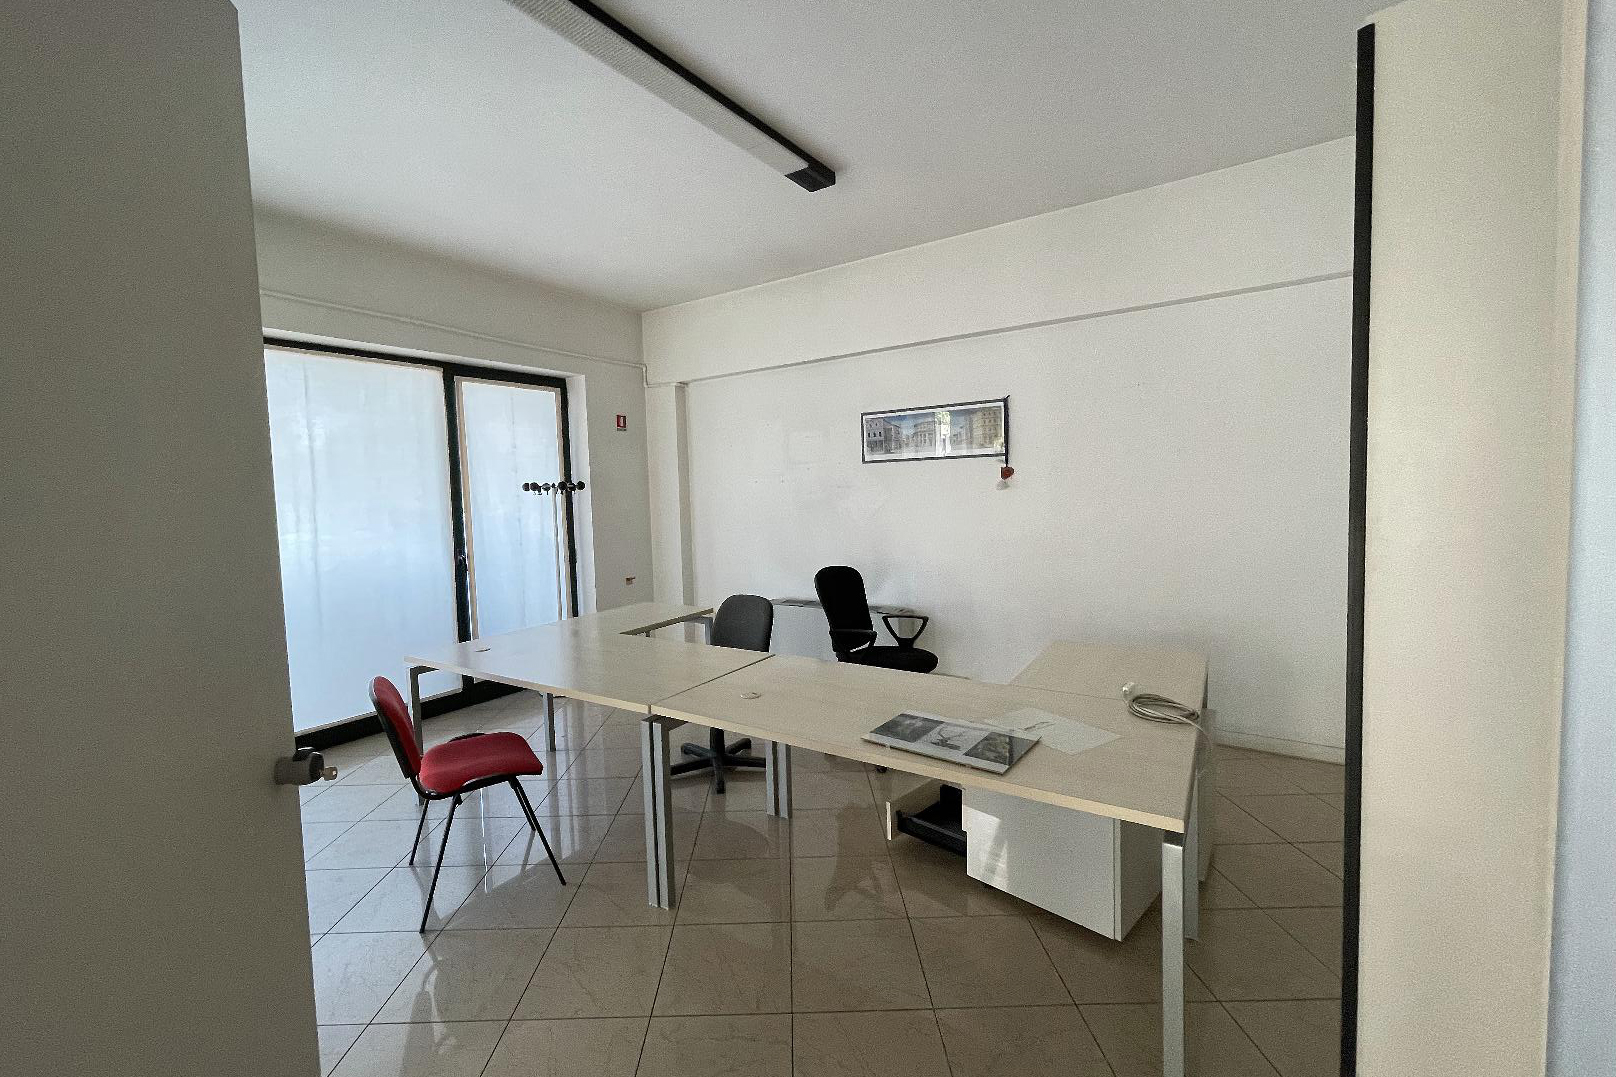 Vendita negozio/ufficio Pesaro - Zona Villa San Martino (NE30)